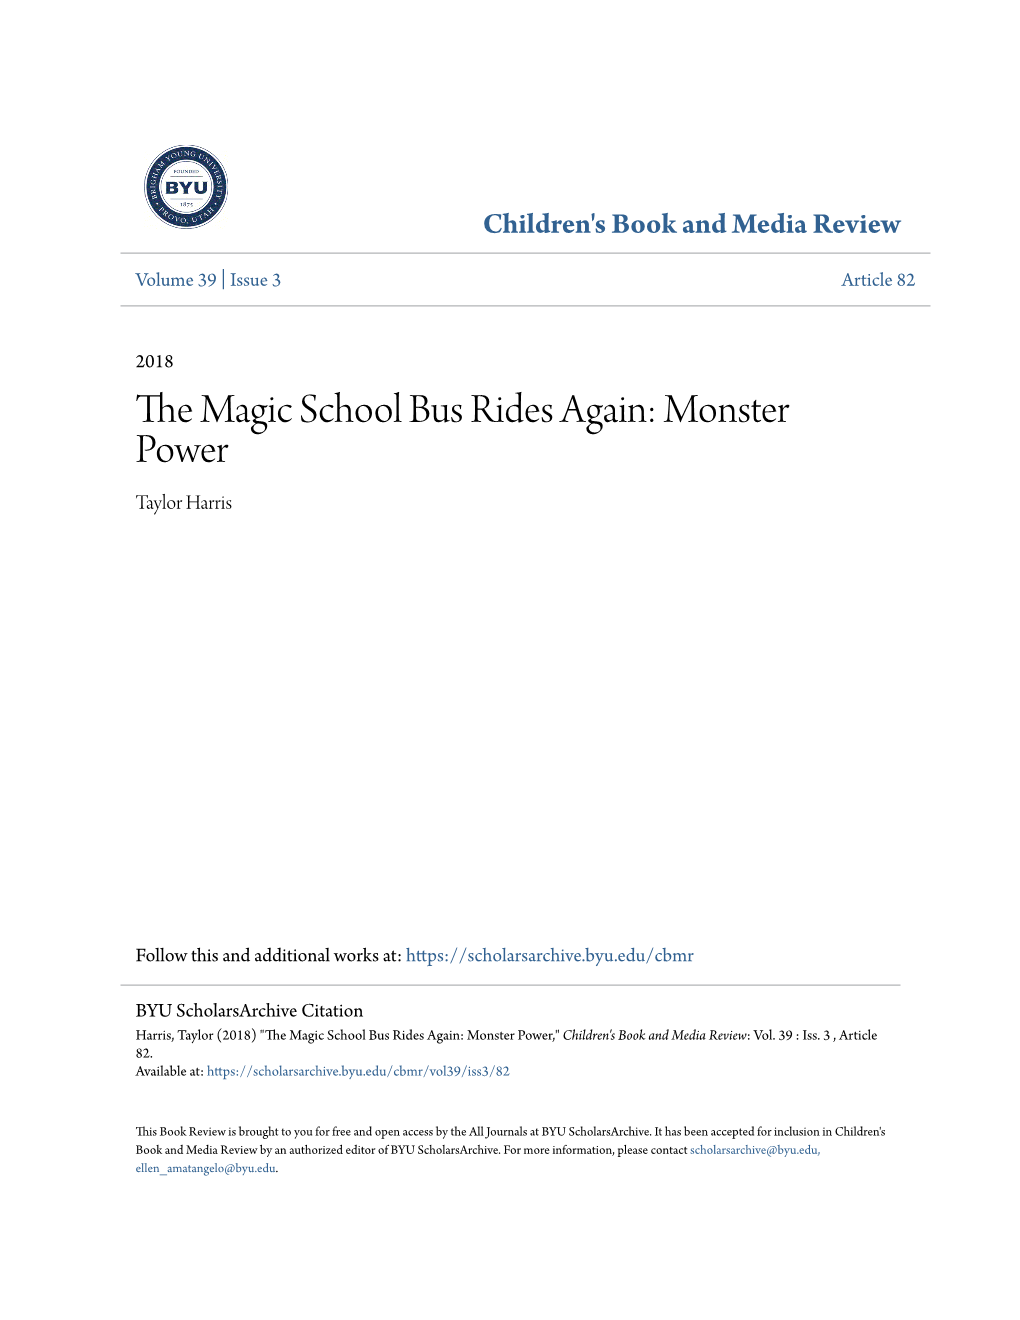 The Magic School Bus Rides Again: Monster Power